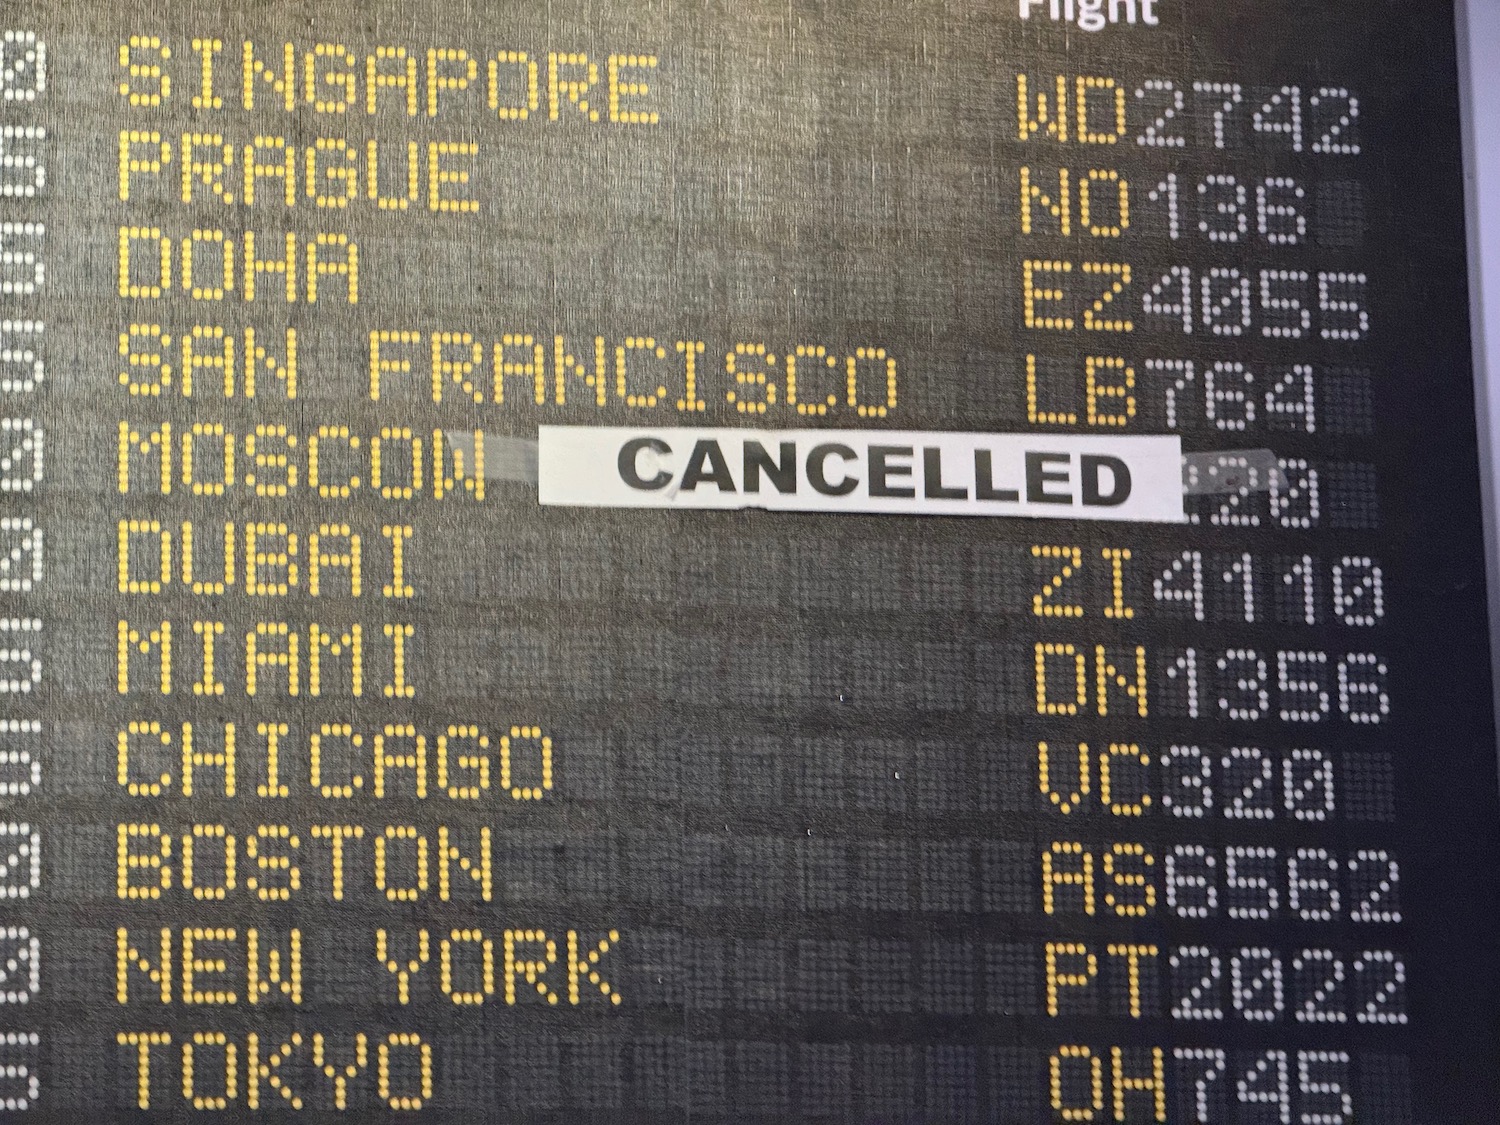 a flight schedule on a black background